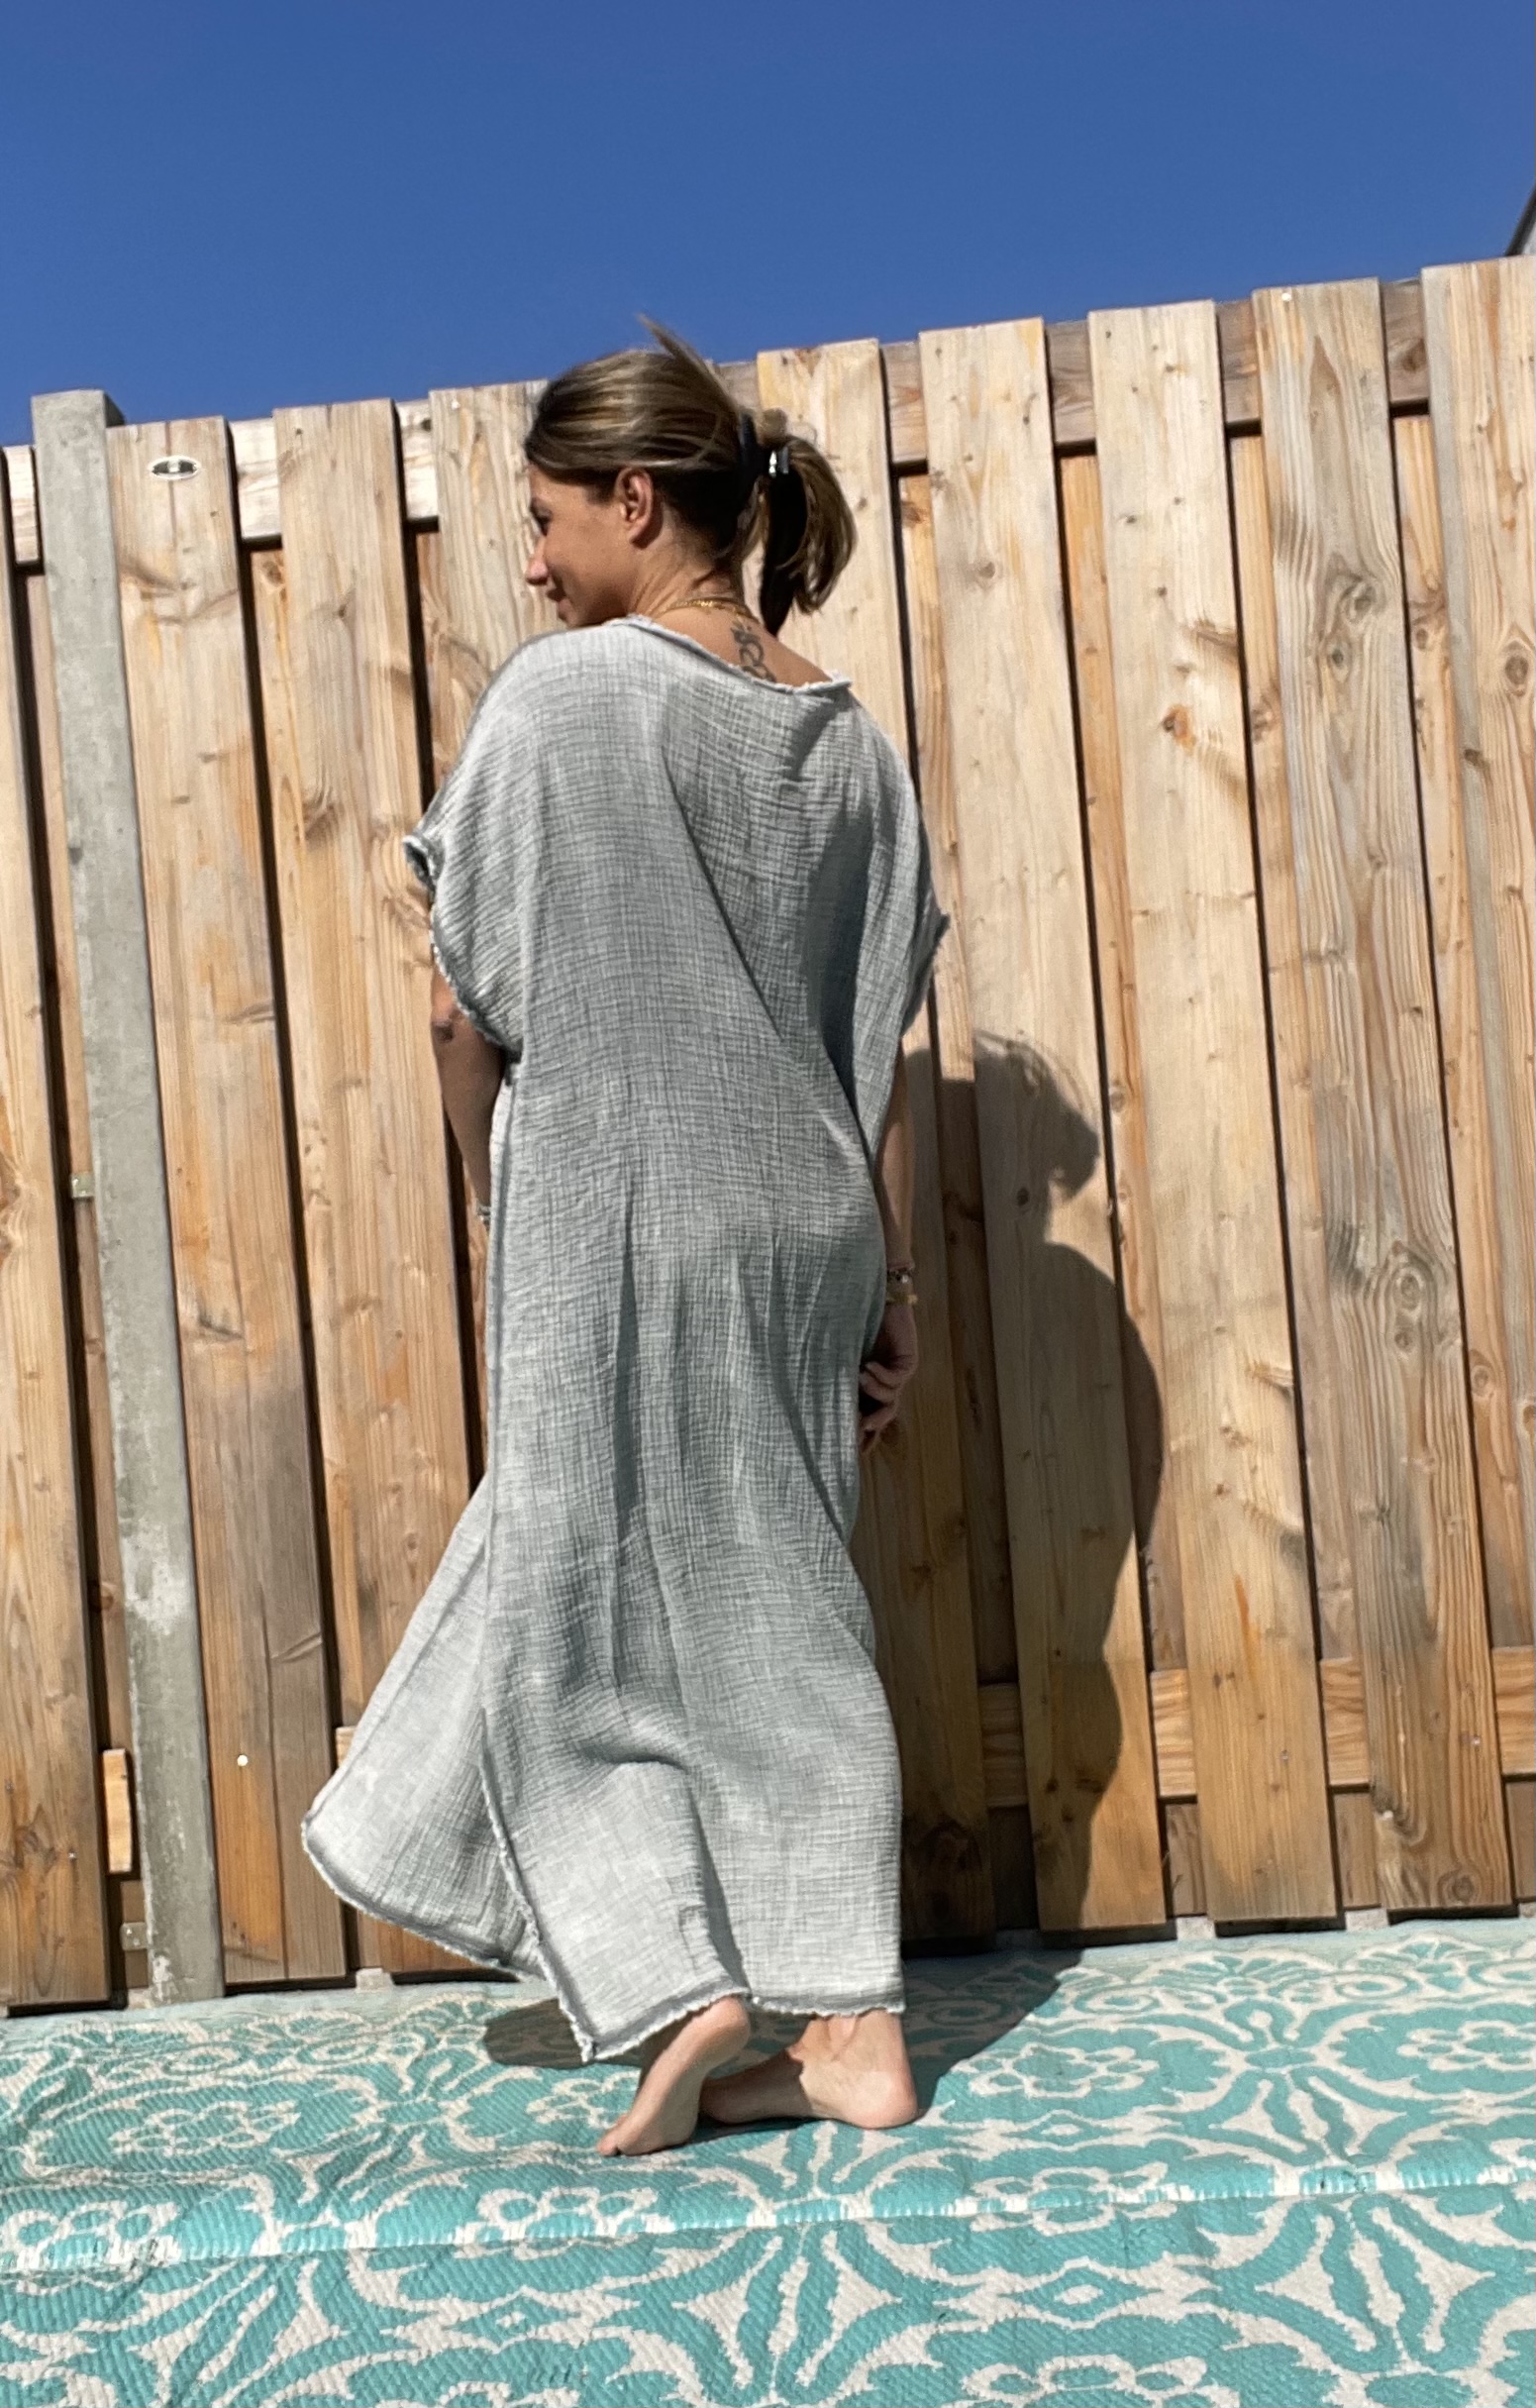 Daniela katoenen jurk-one size - licht grijs kleur.